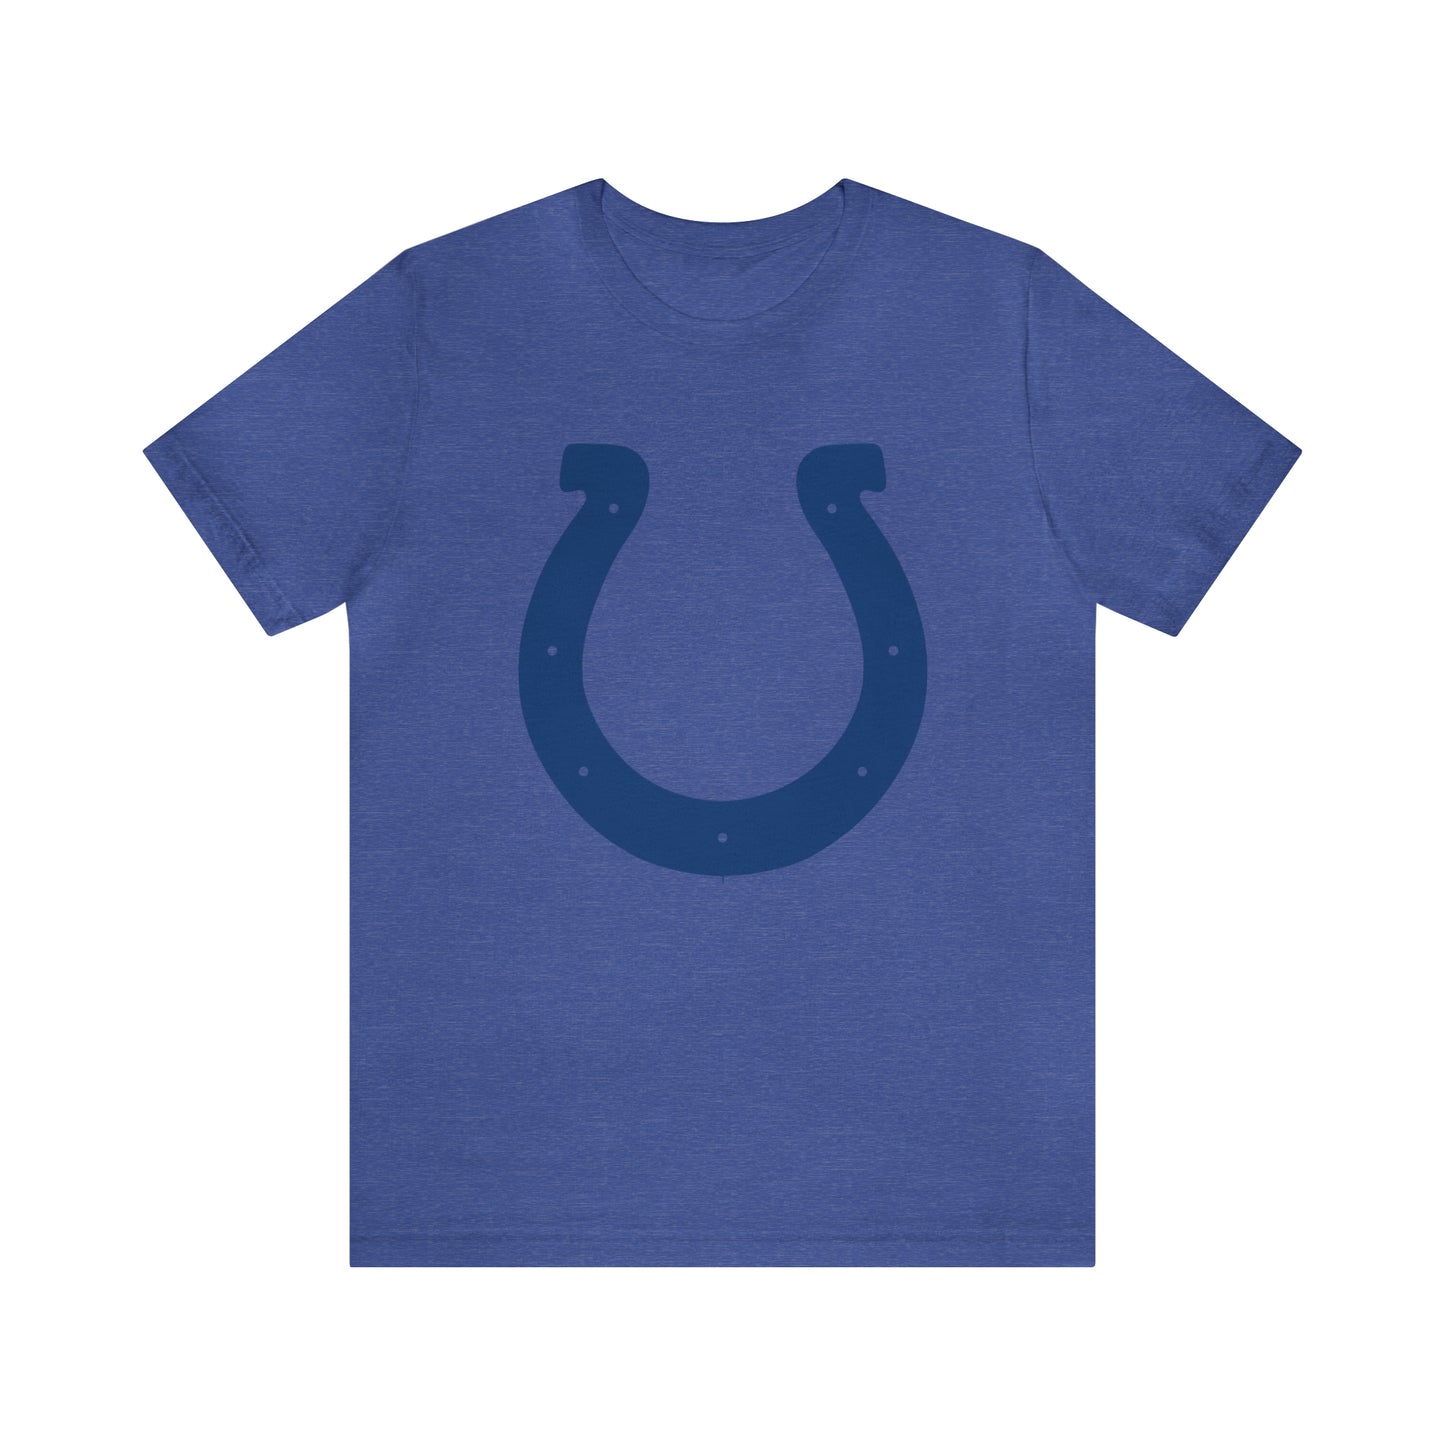 Vintage Indianapolis Colts Short Sleeve T-Shirt - Retro Style Football Tee - Men's & Women's - Design 3